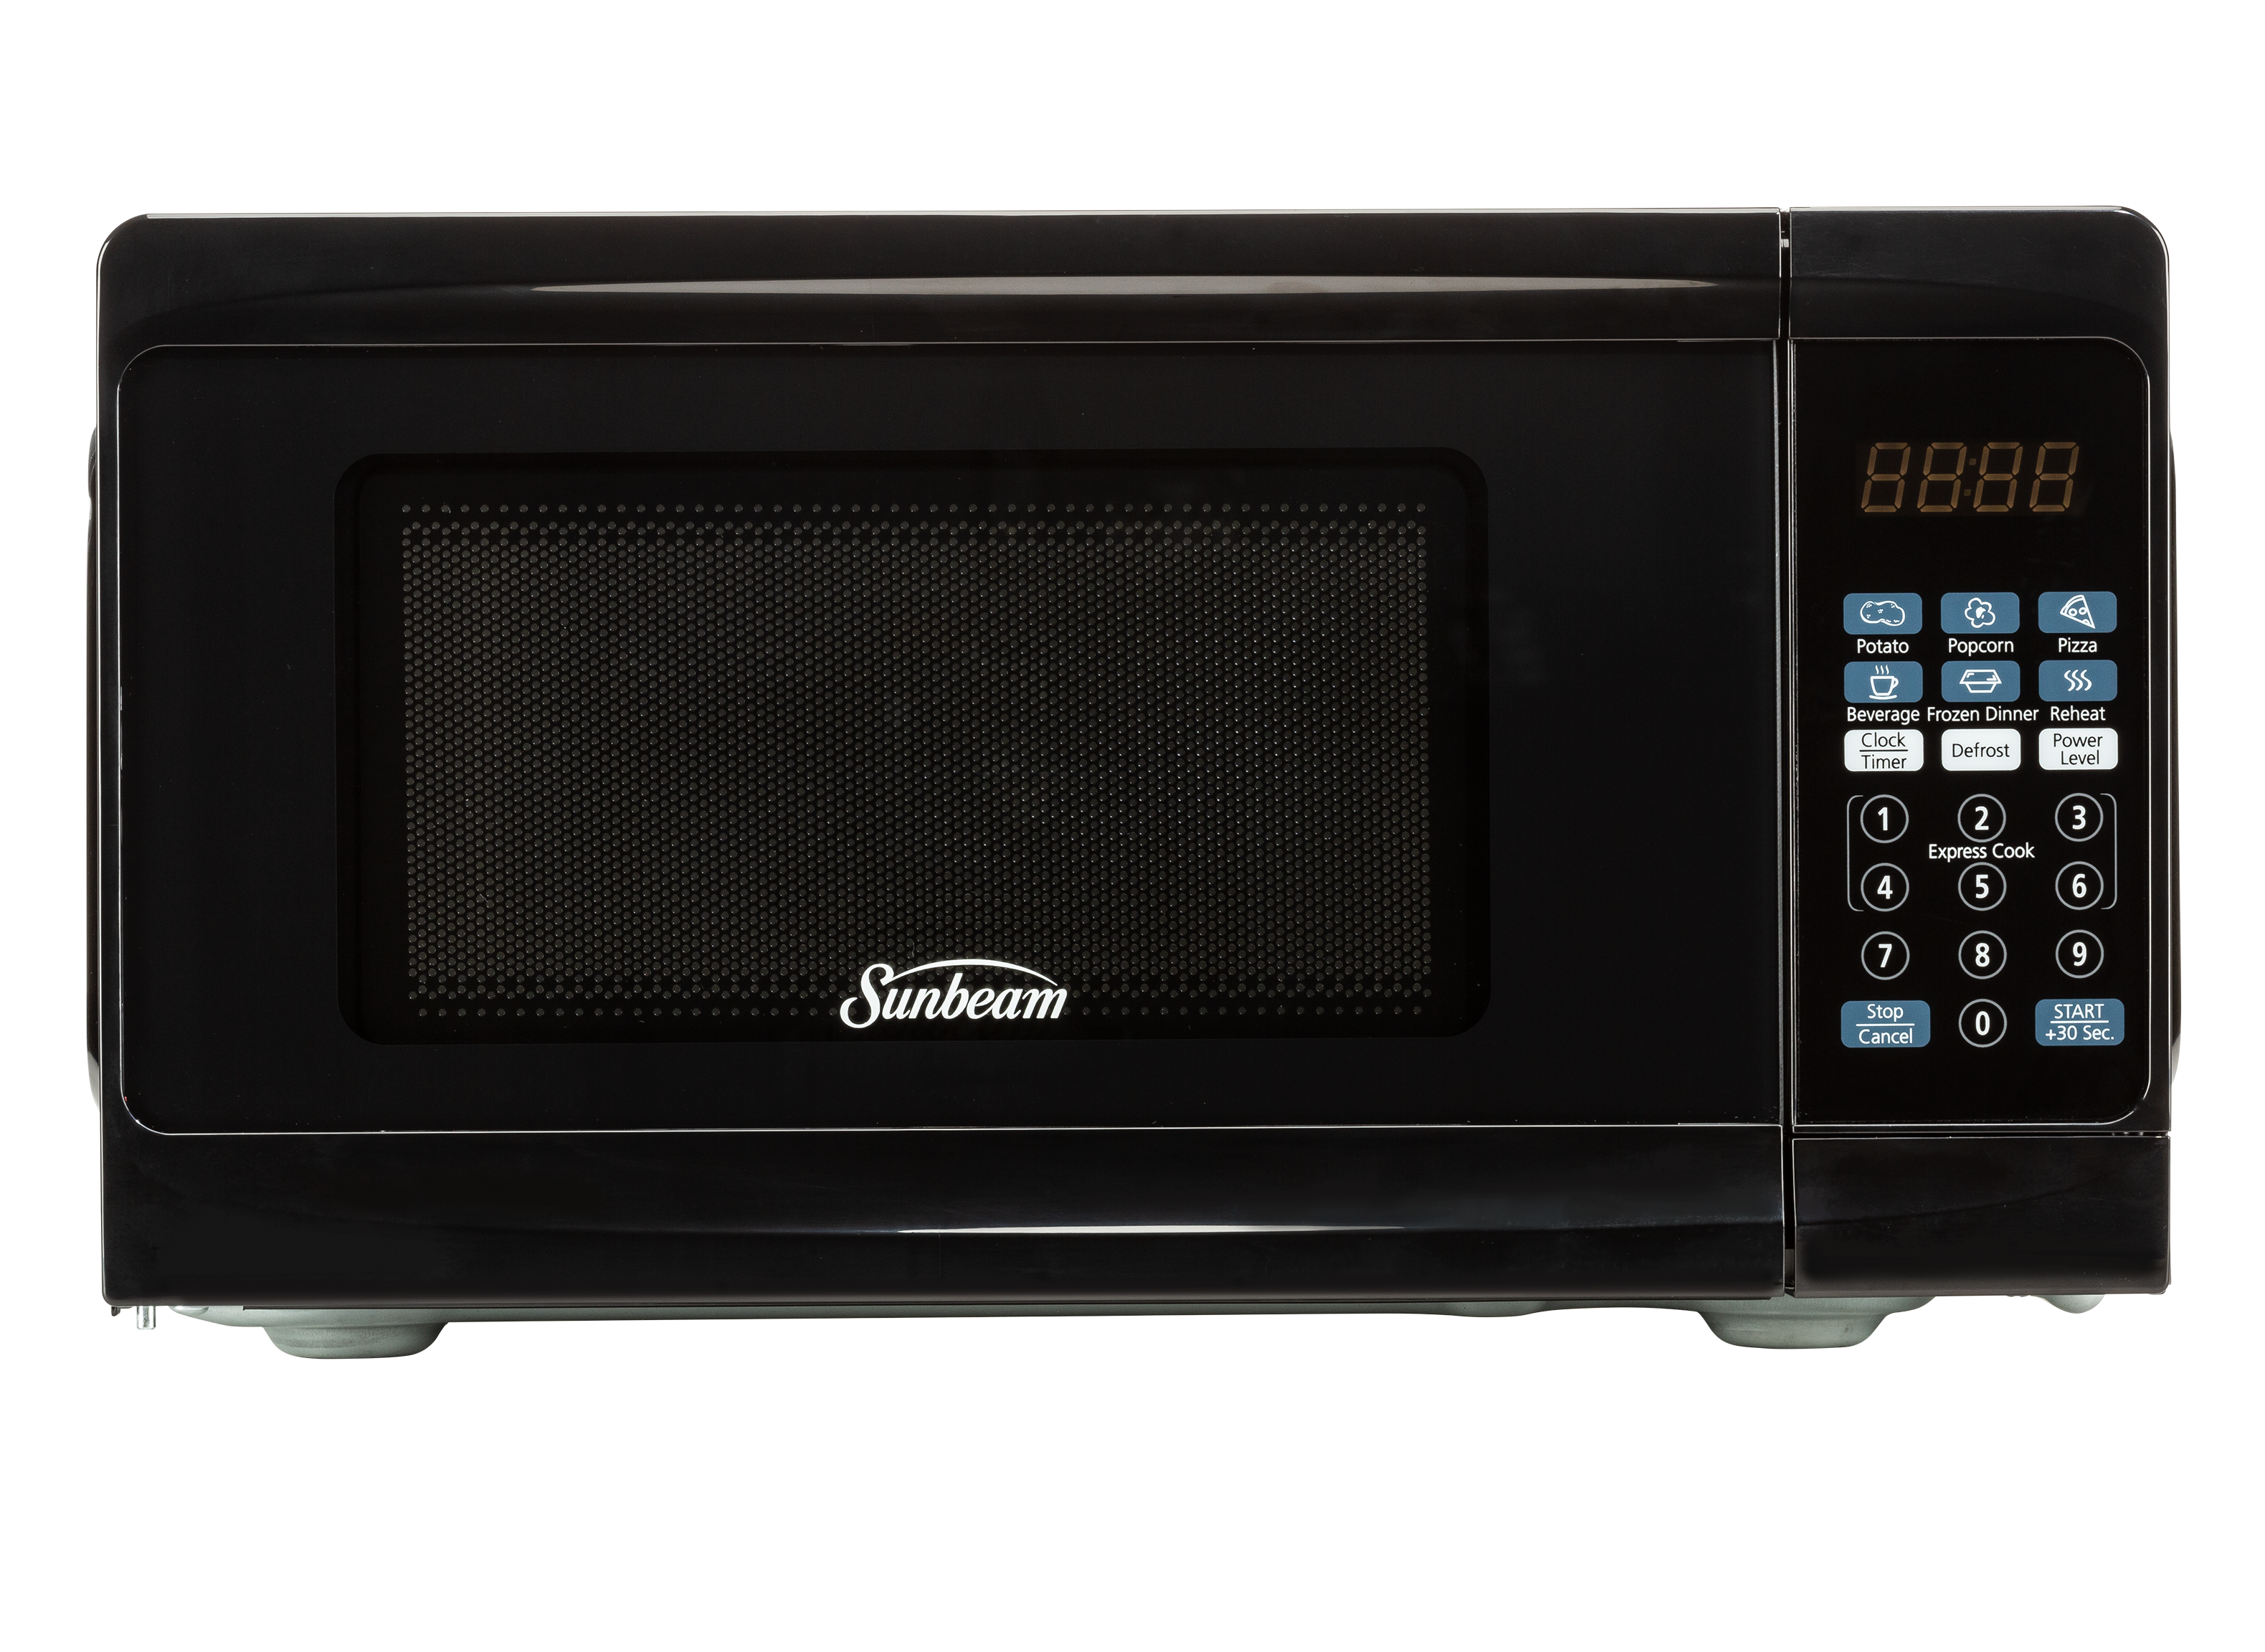 Sunbeam SGCMV807BK-07 Microwave Oven Review - Consumer Reports